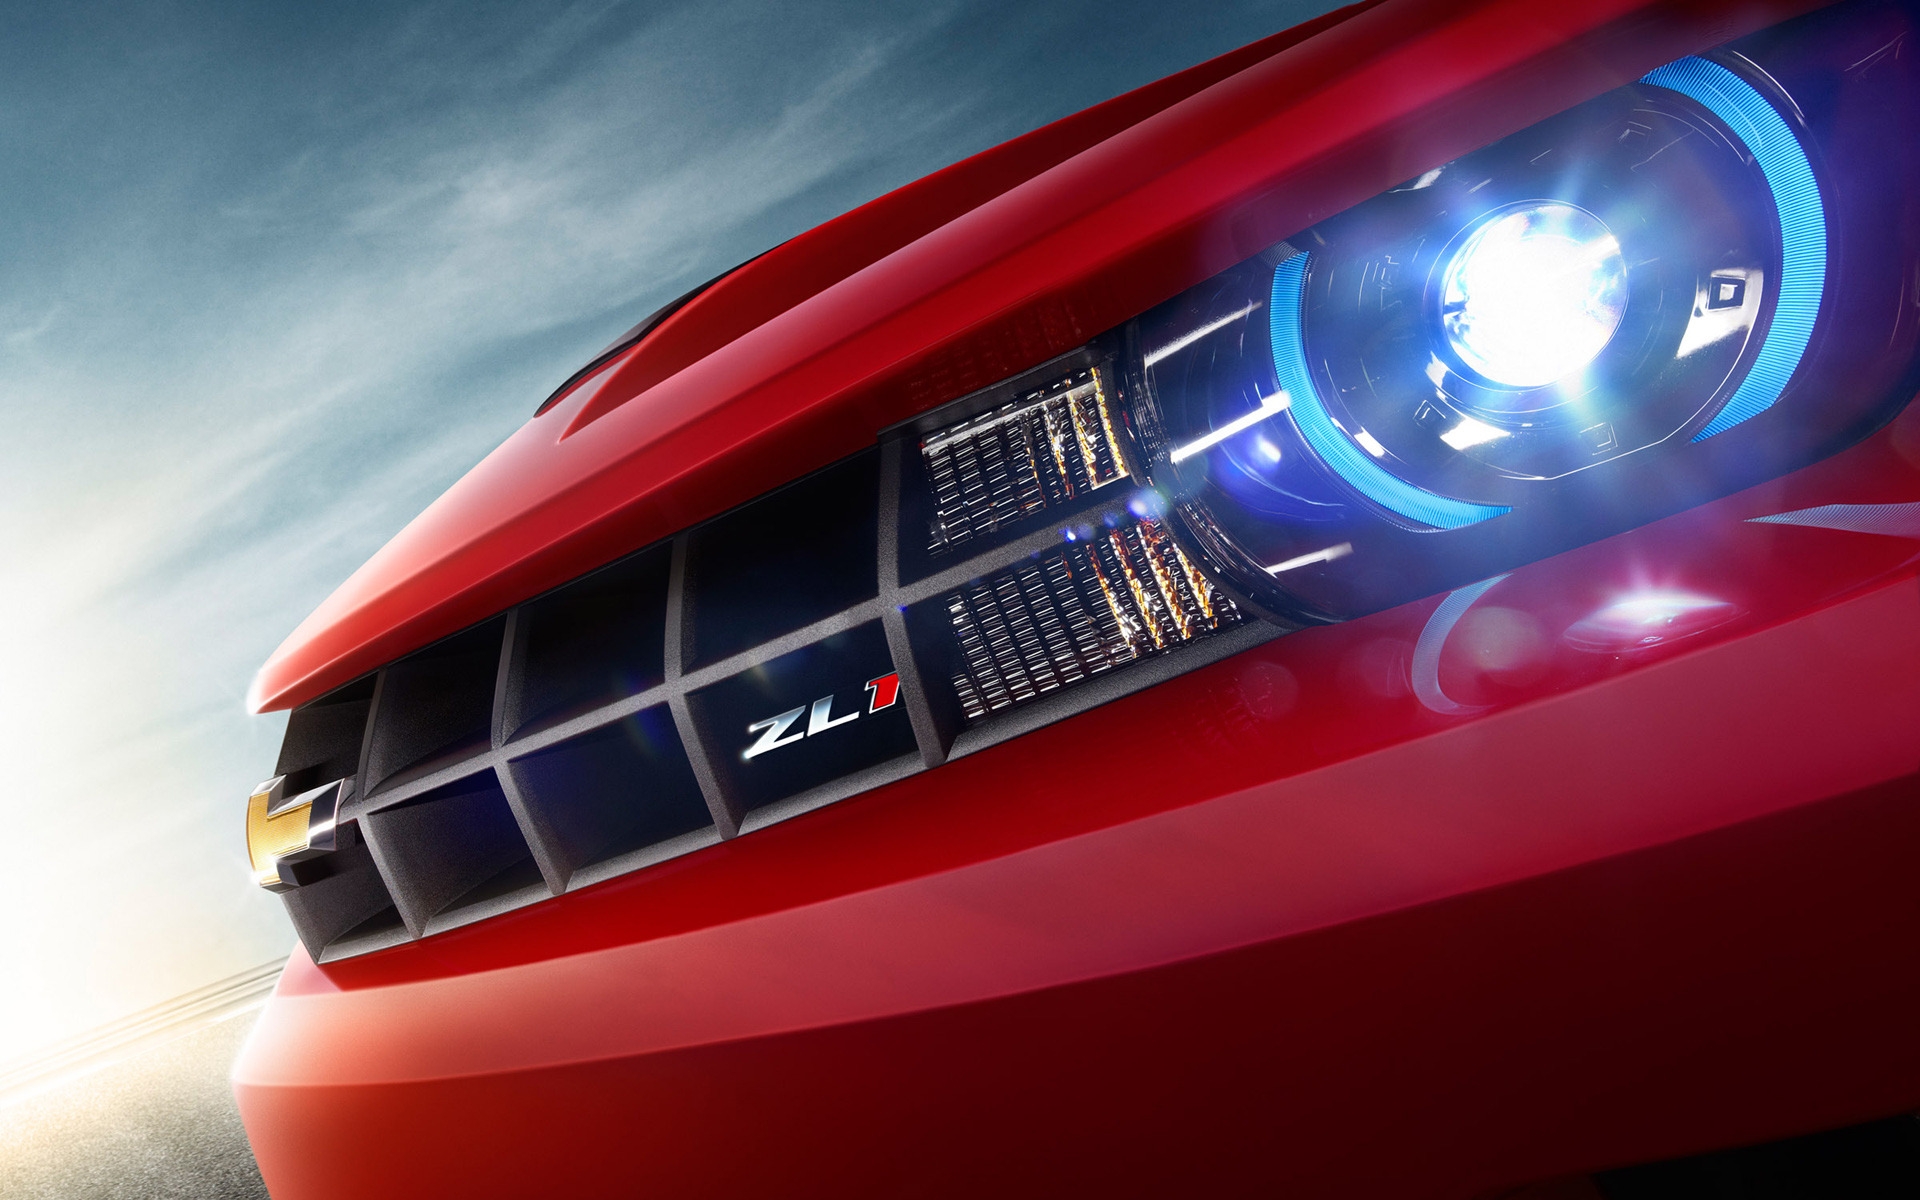 2012 Chevy Camaro ZL1 Headlight for 1920 x 1200 widescreen resolution